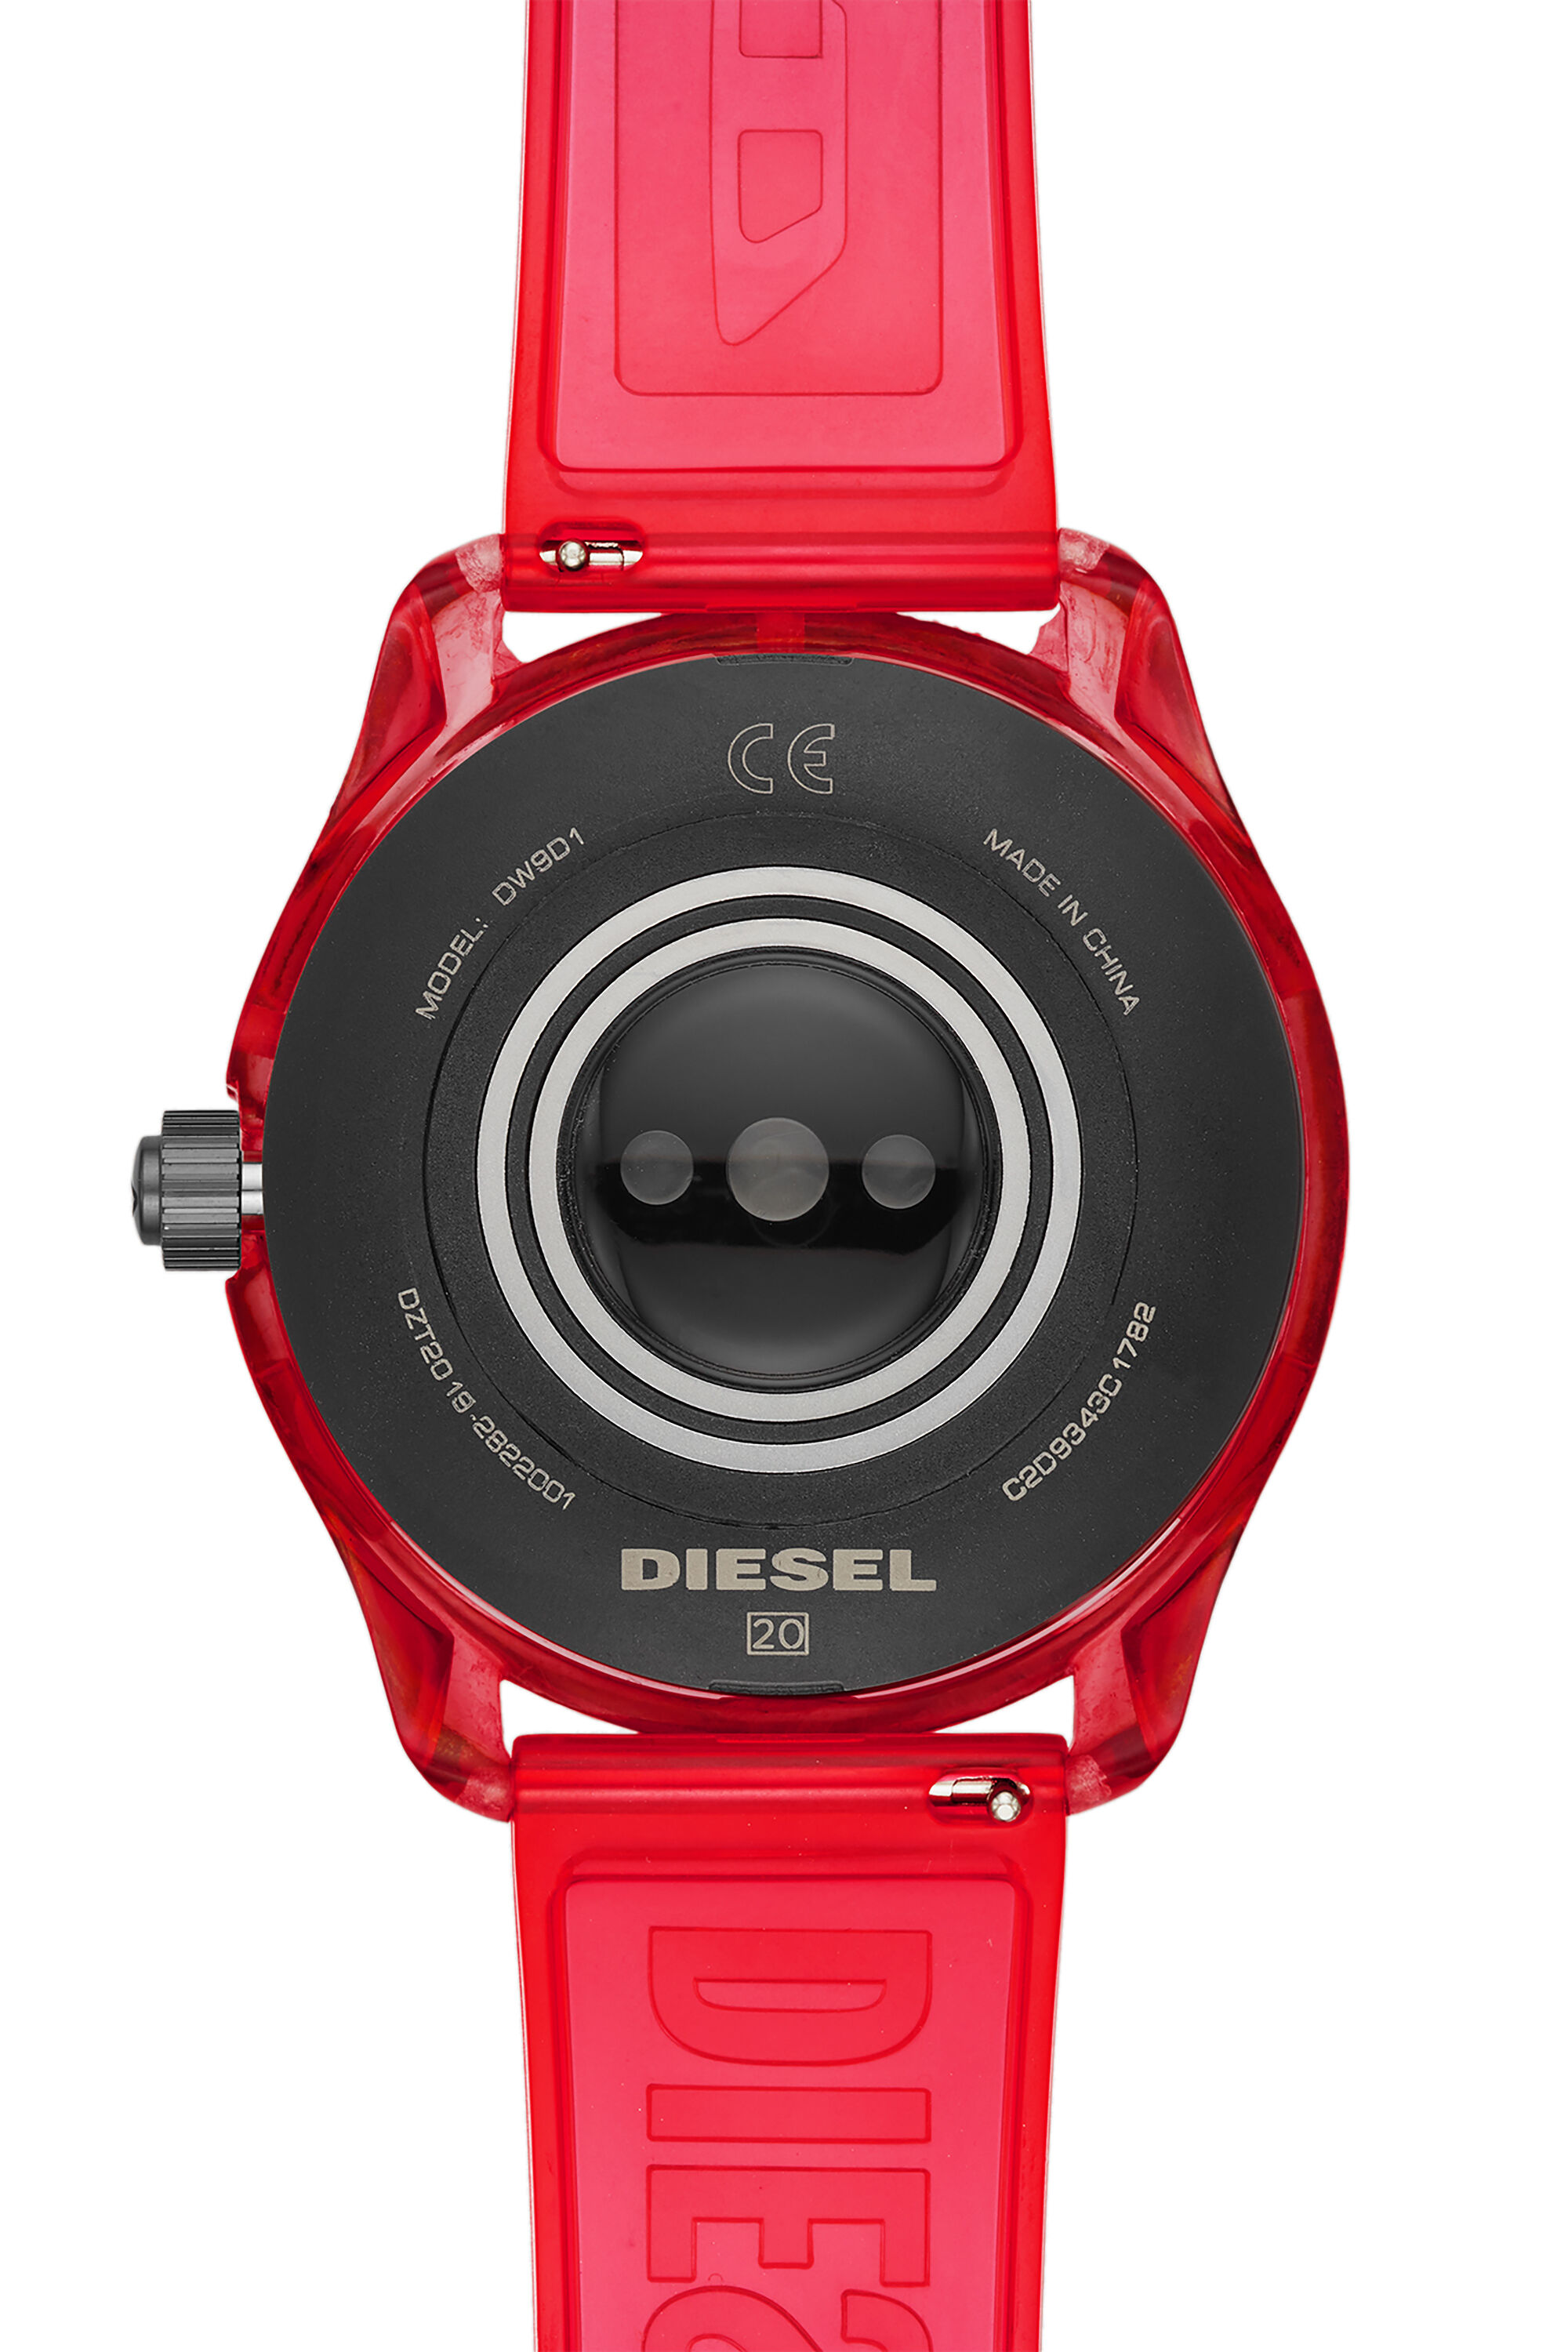 Diesel - DT2019, Rosso - Image 4